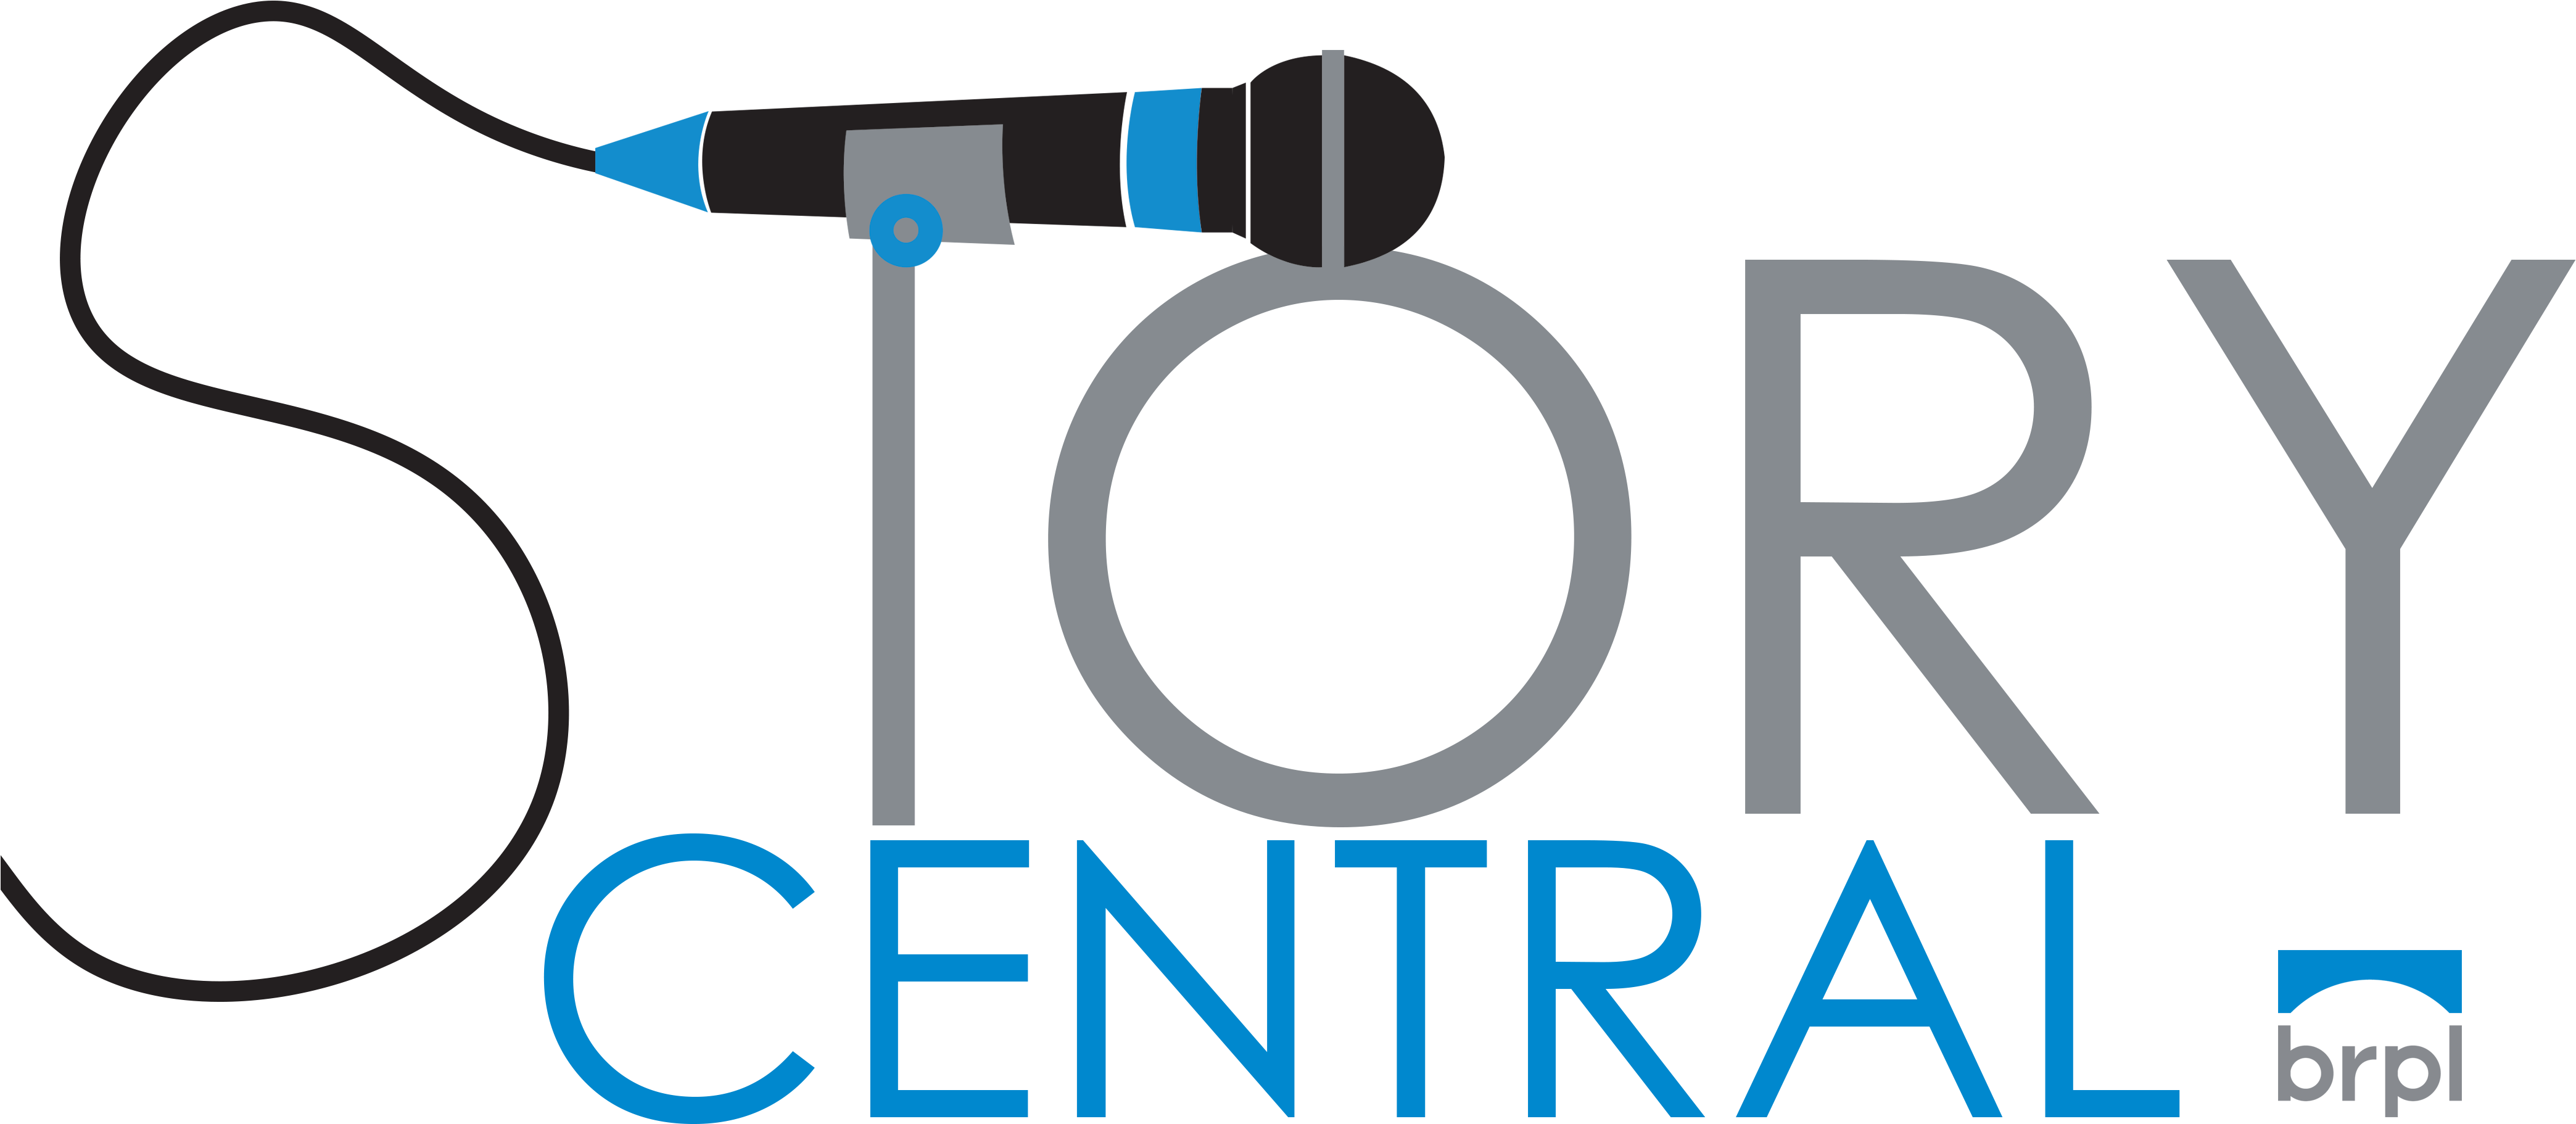 Story Central Logo Final Transparent - Factory Builder Stores (4380x2340)